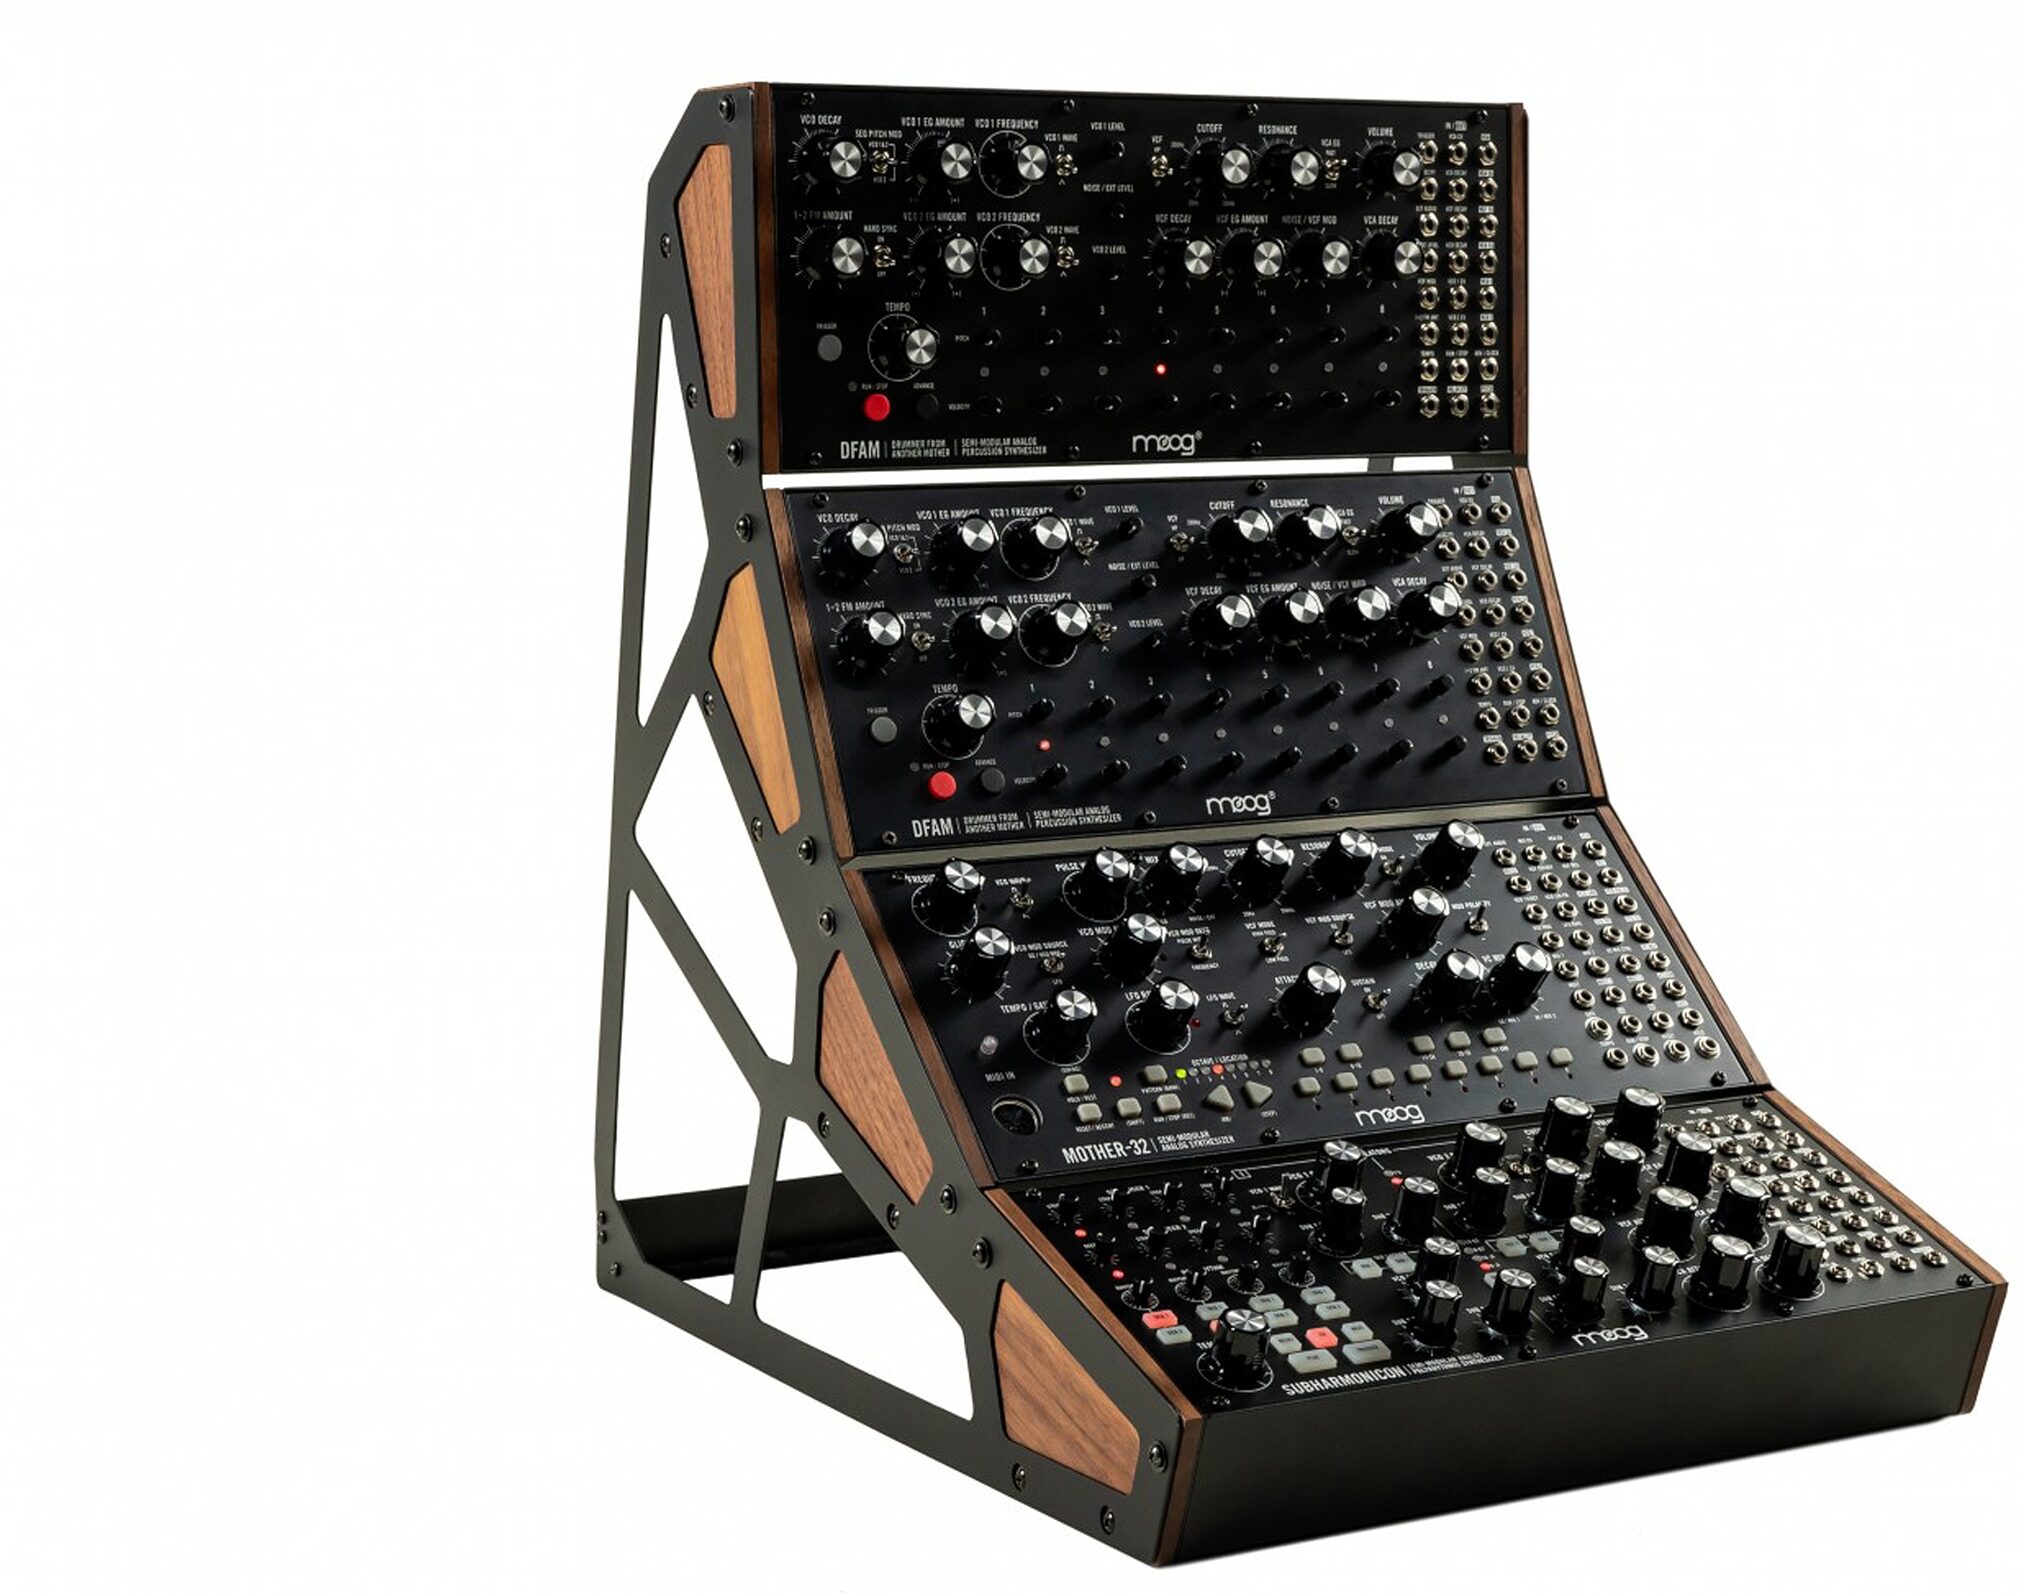 Moog 4-Tier Rack Kit for DFAM/Mother-32/Subharmonicon Synthesizer